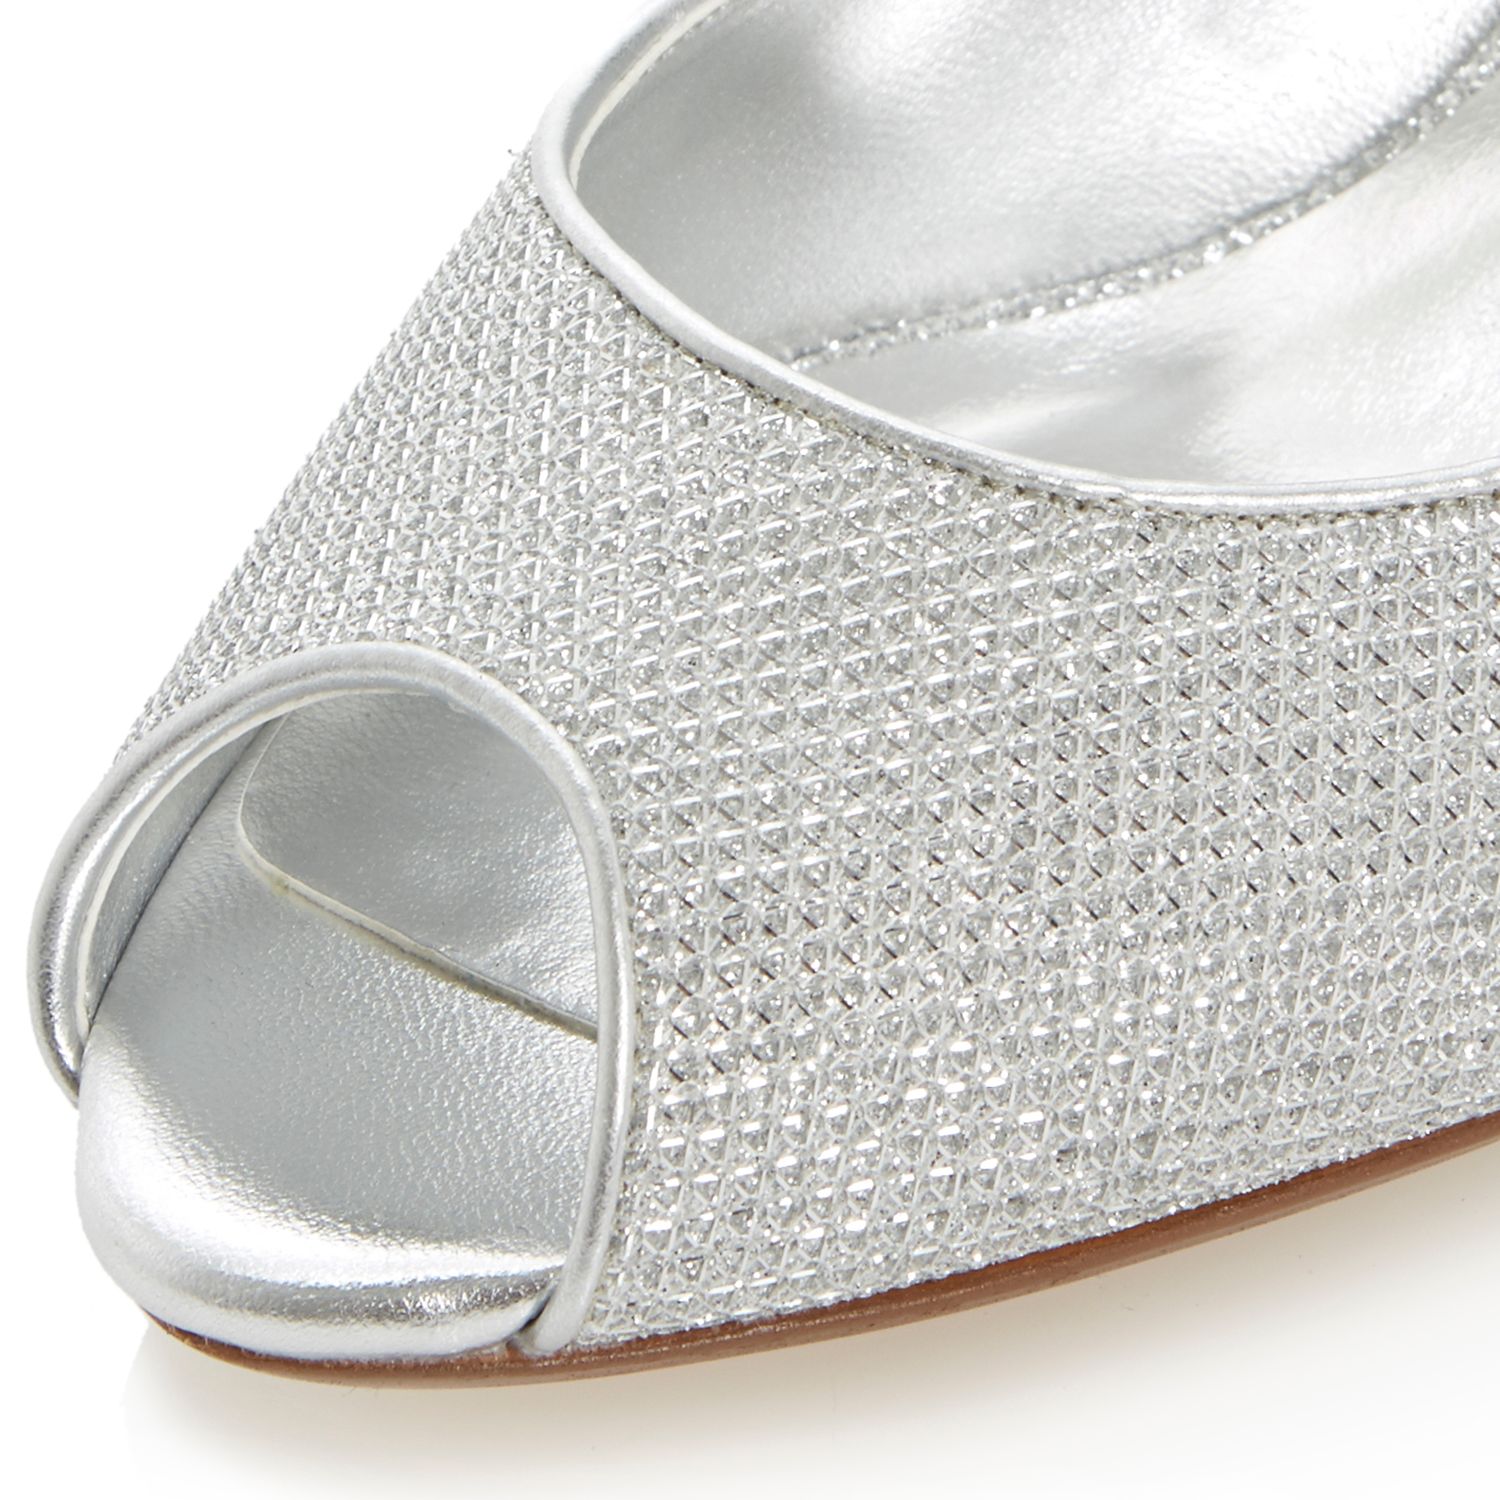 Dune Delia Peep Toe Kitten Court Shoes, Silver